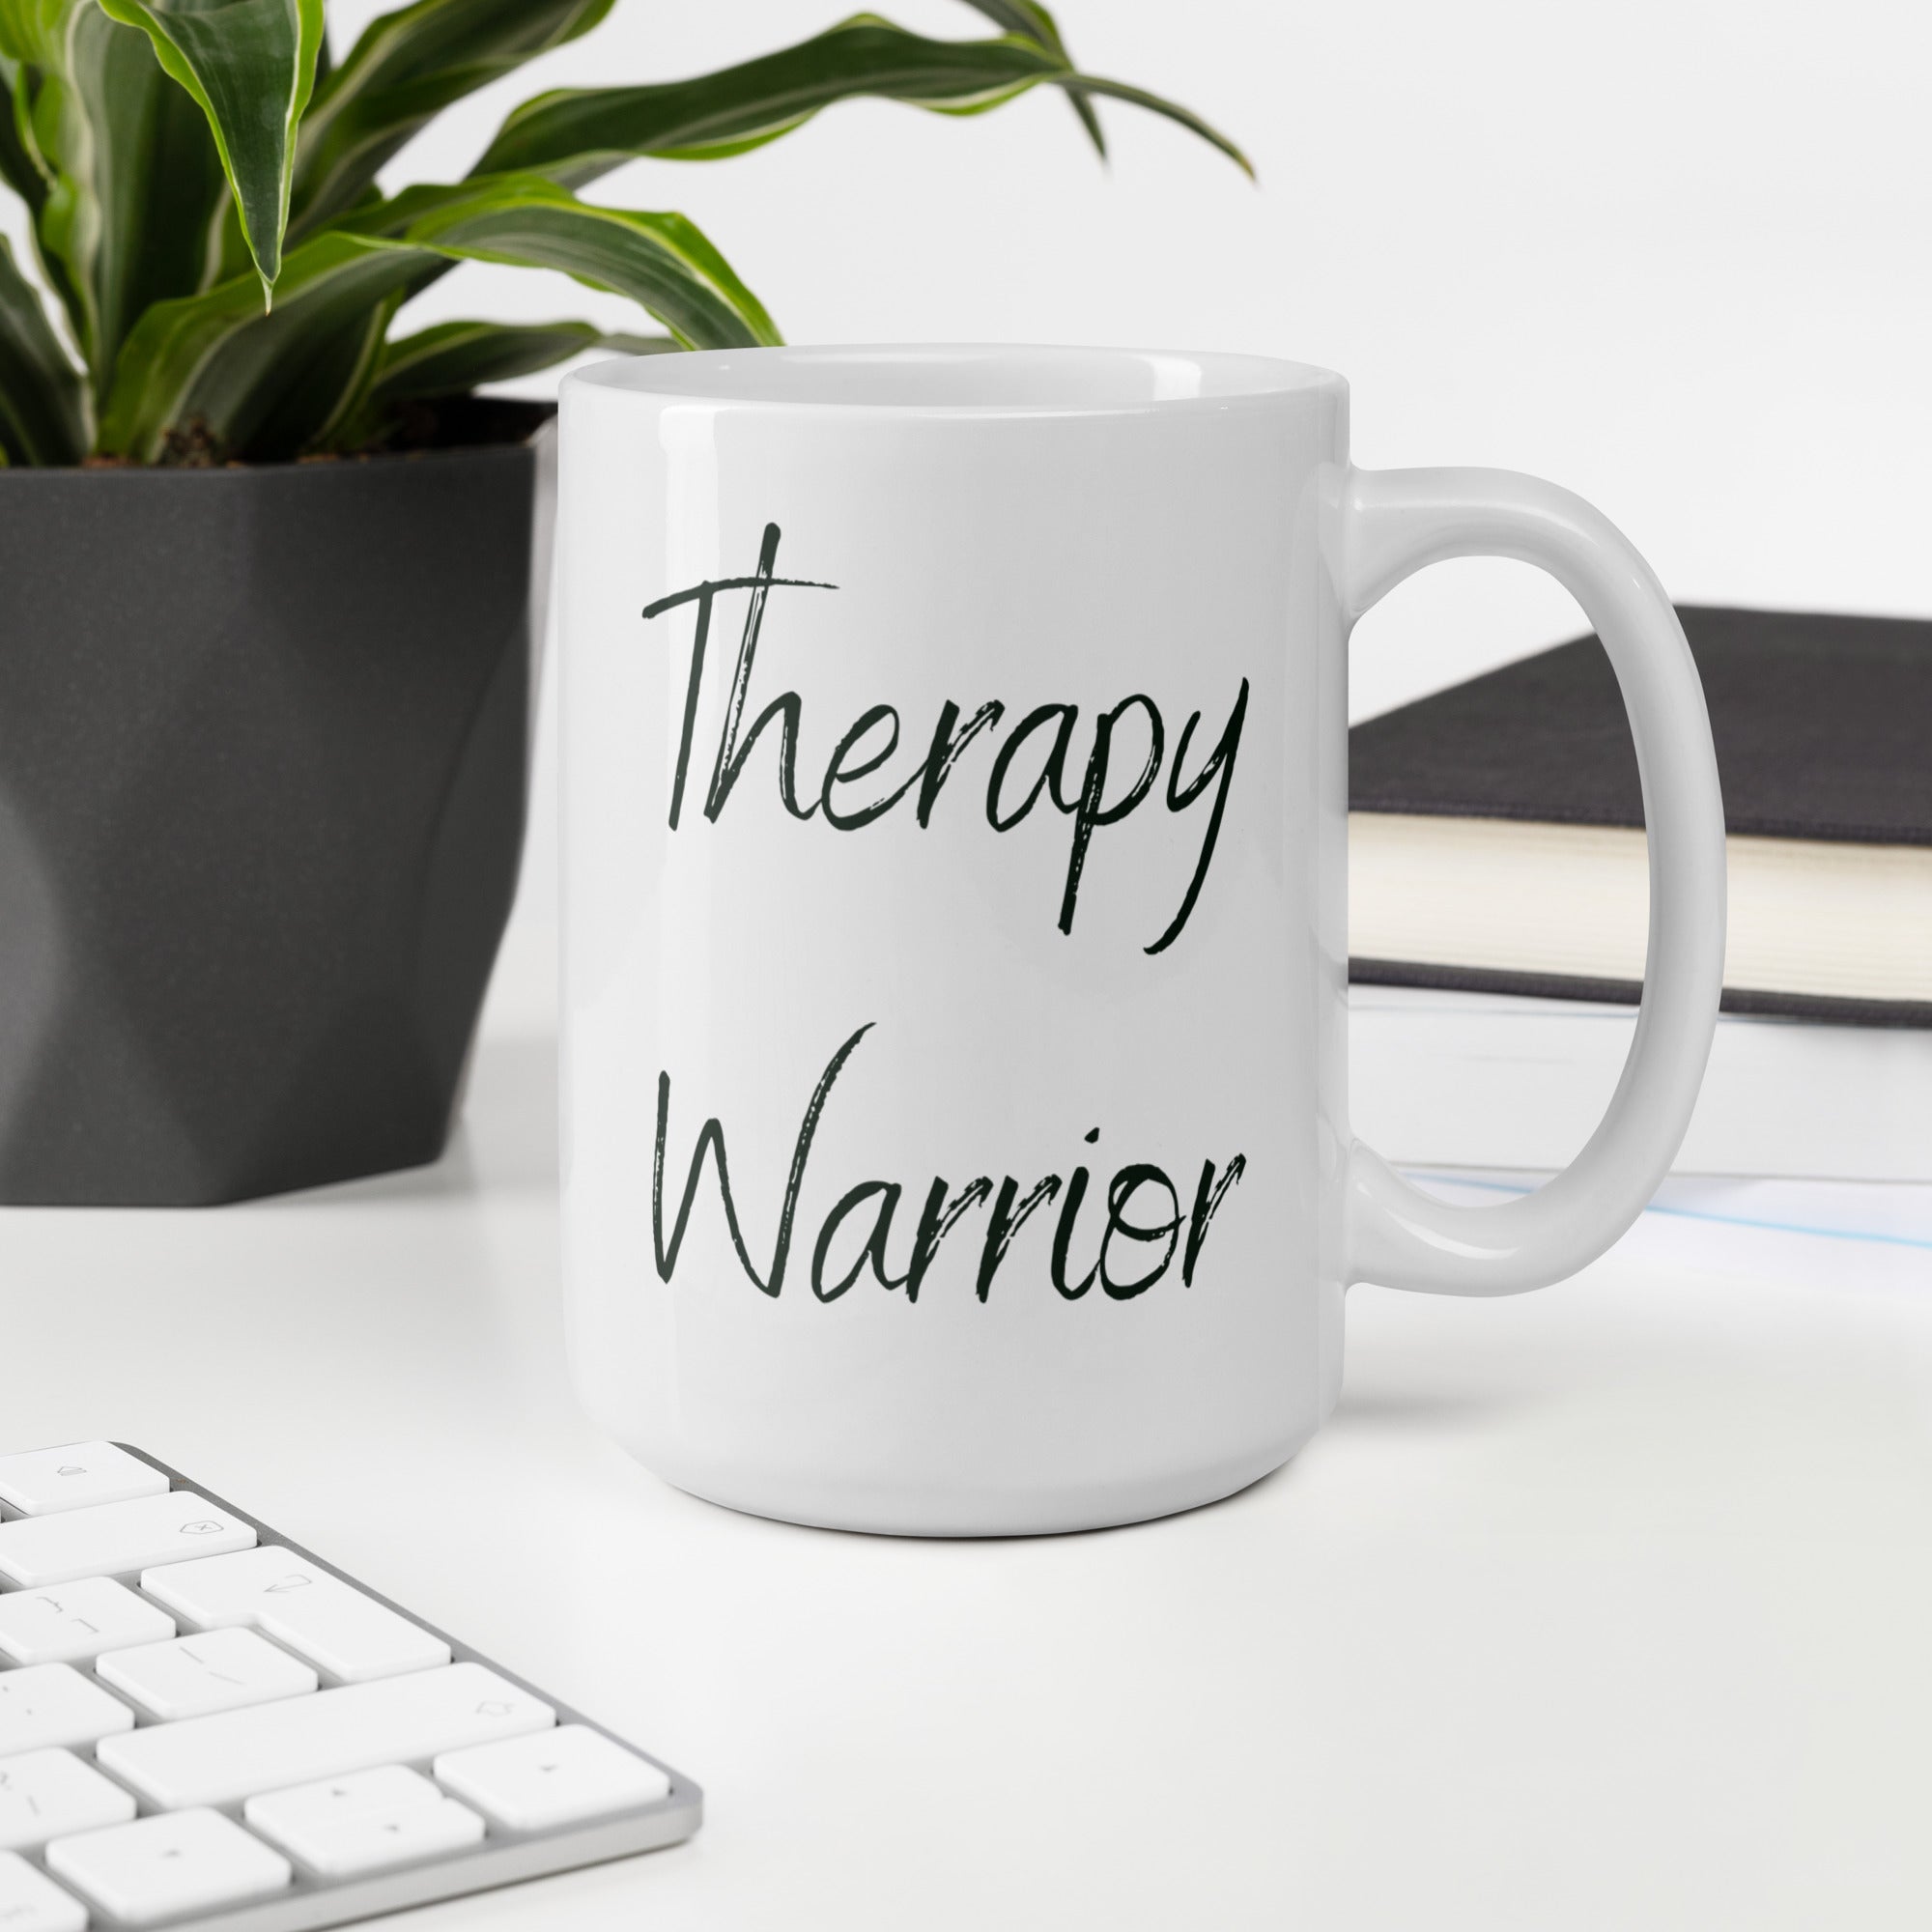 Therapy Warrior - White Glossy Mug